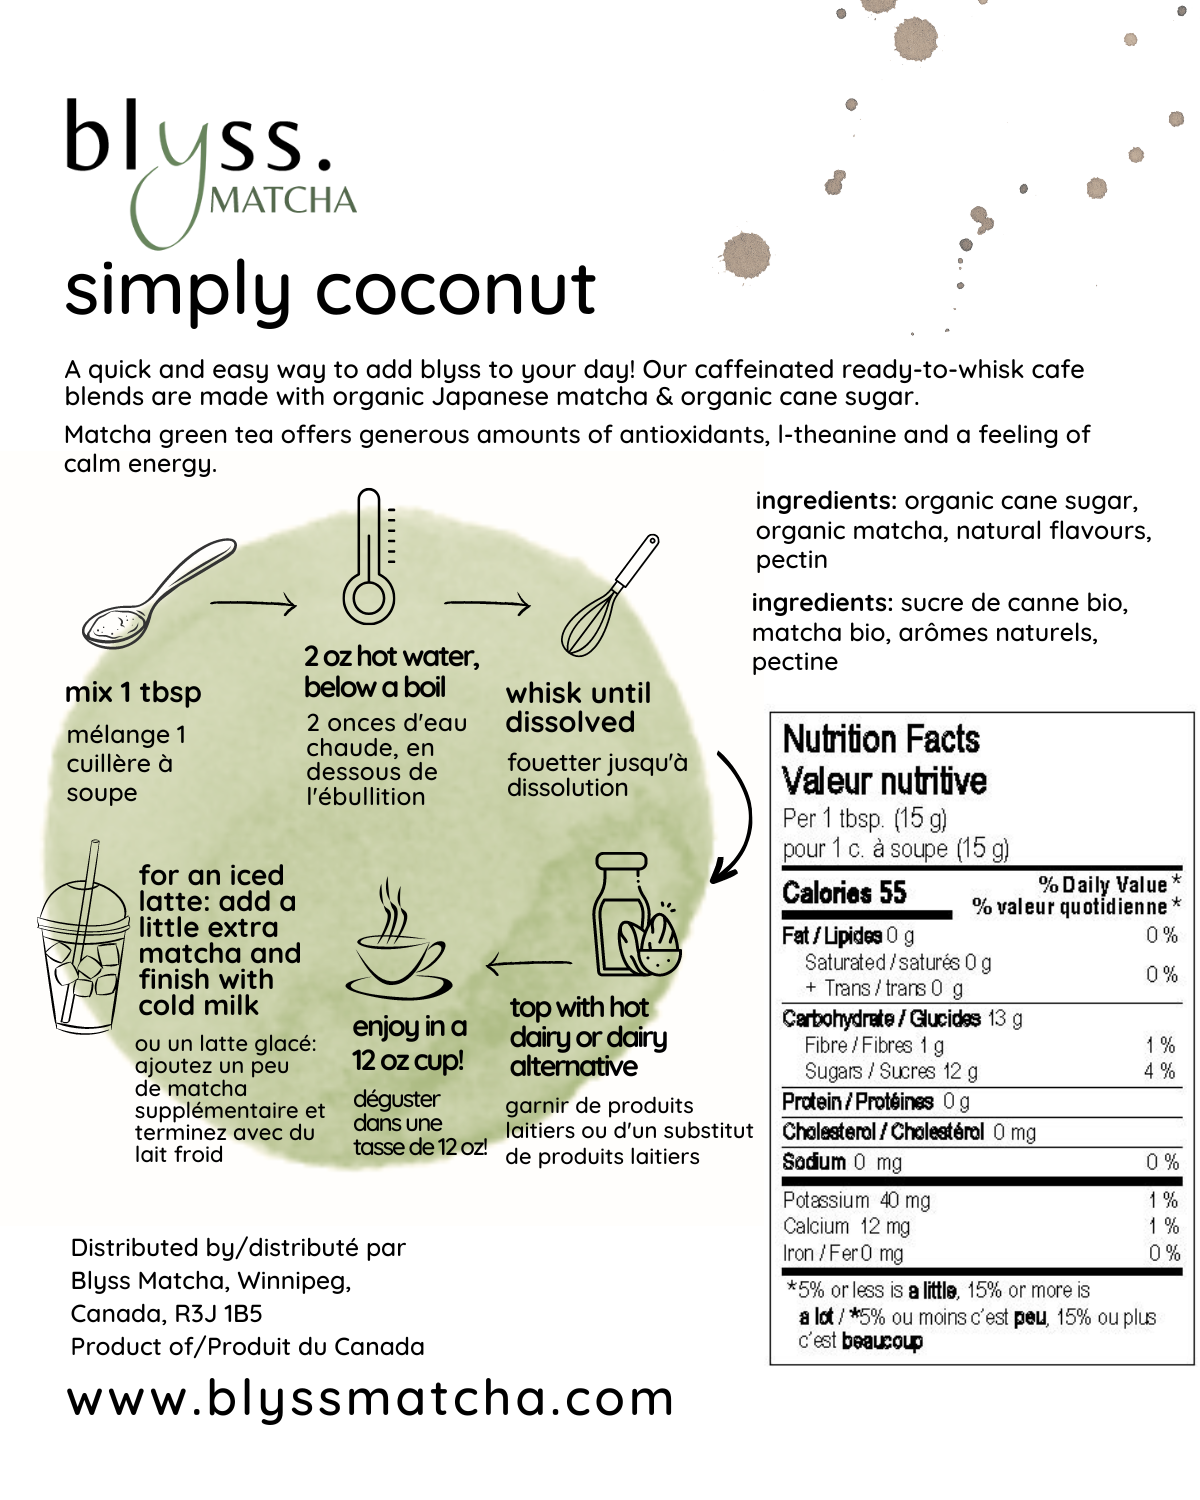 Simply coconut